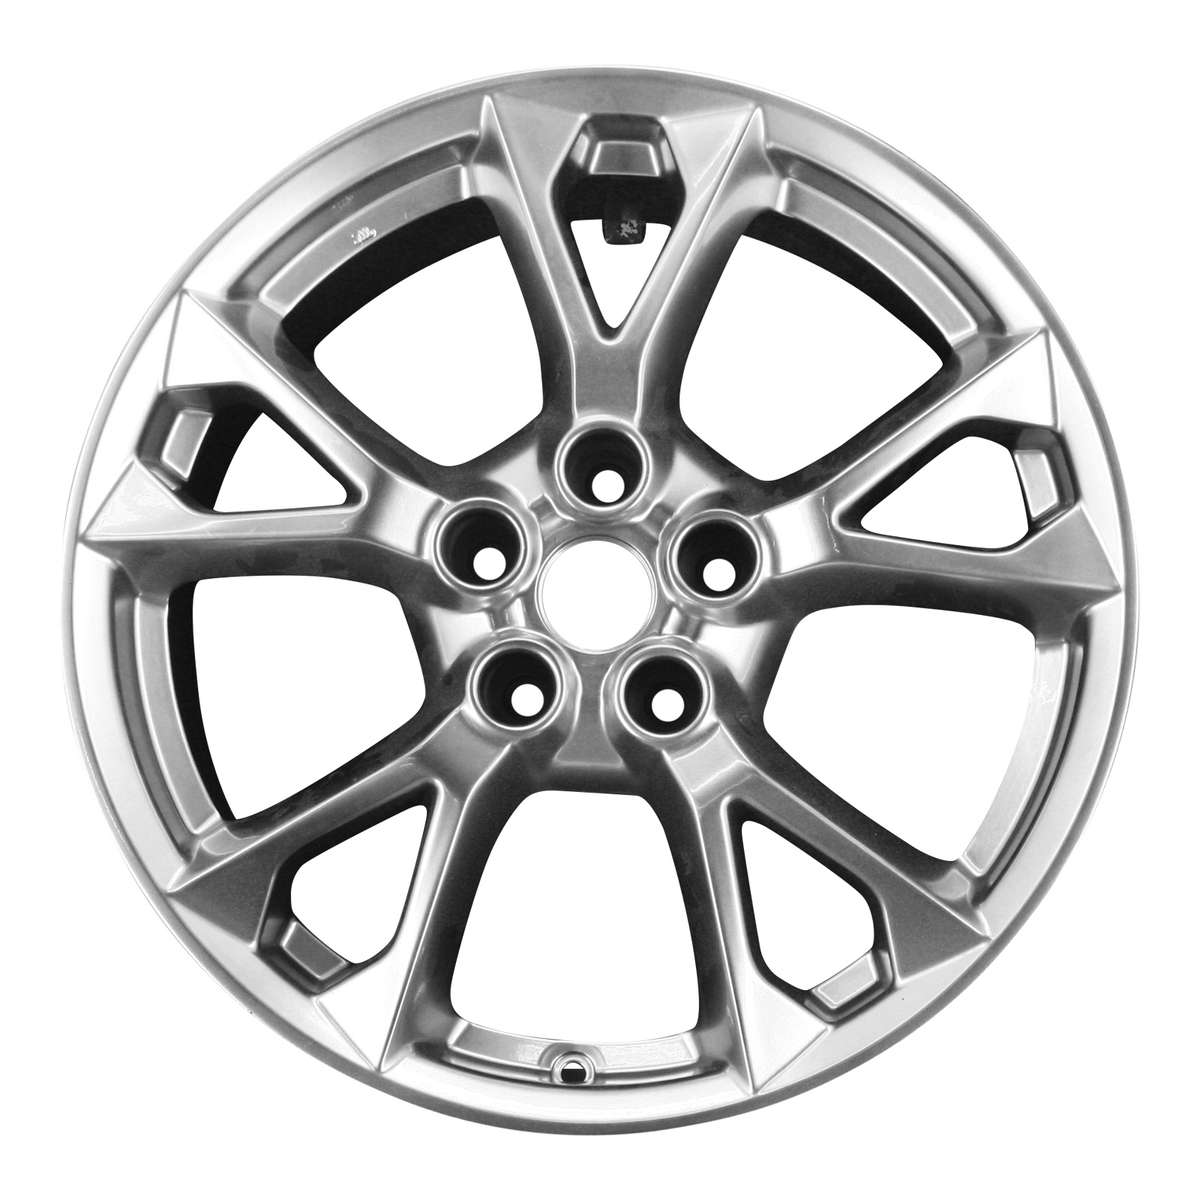 2014 Nissan Maxima 18" OEM Wheel Rim W62582H